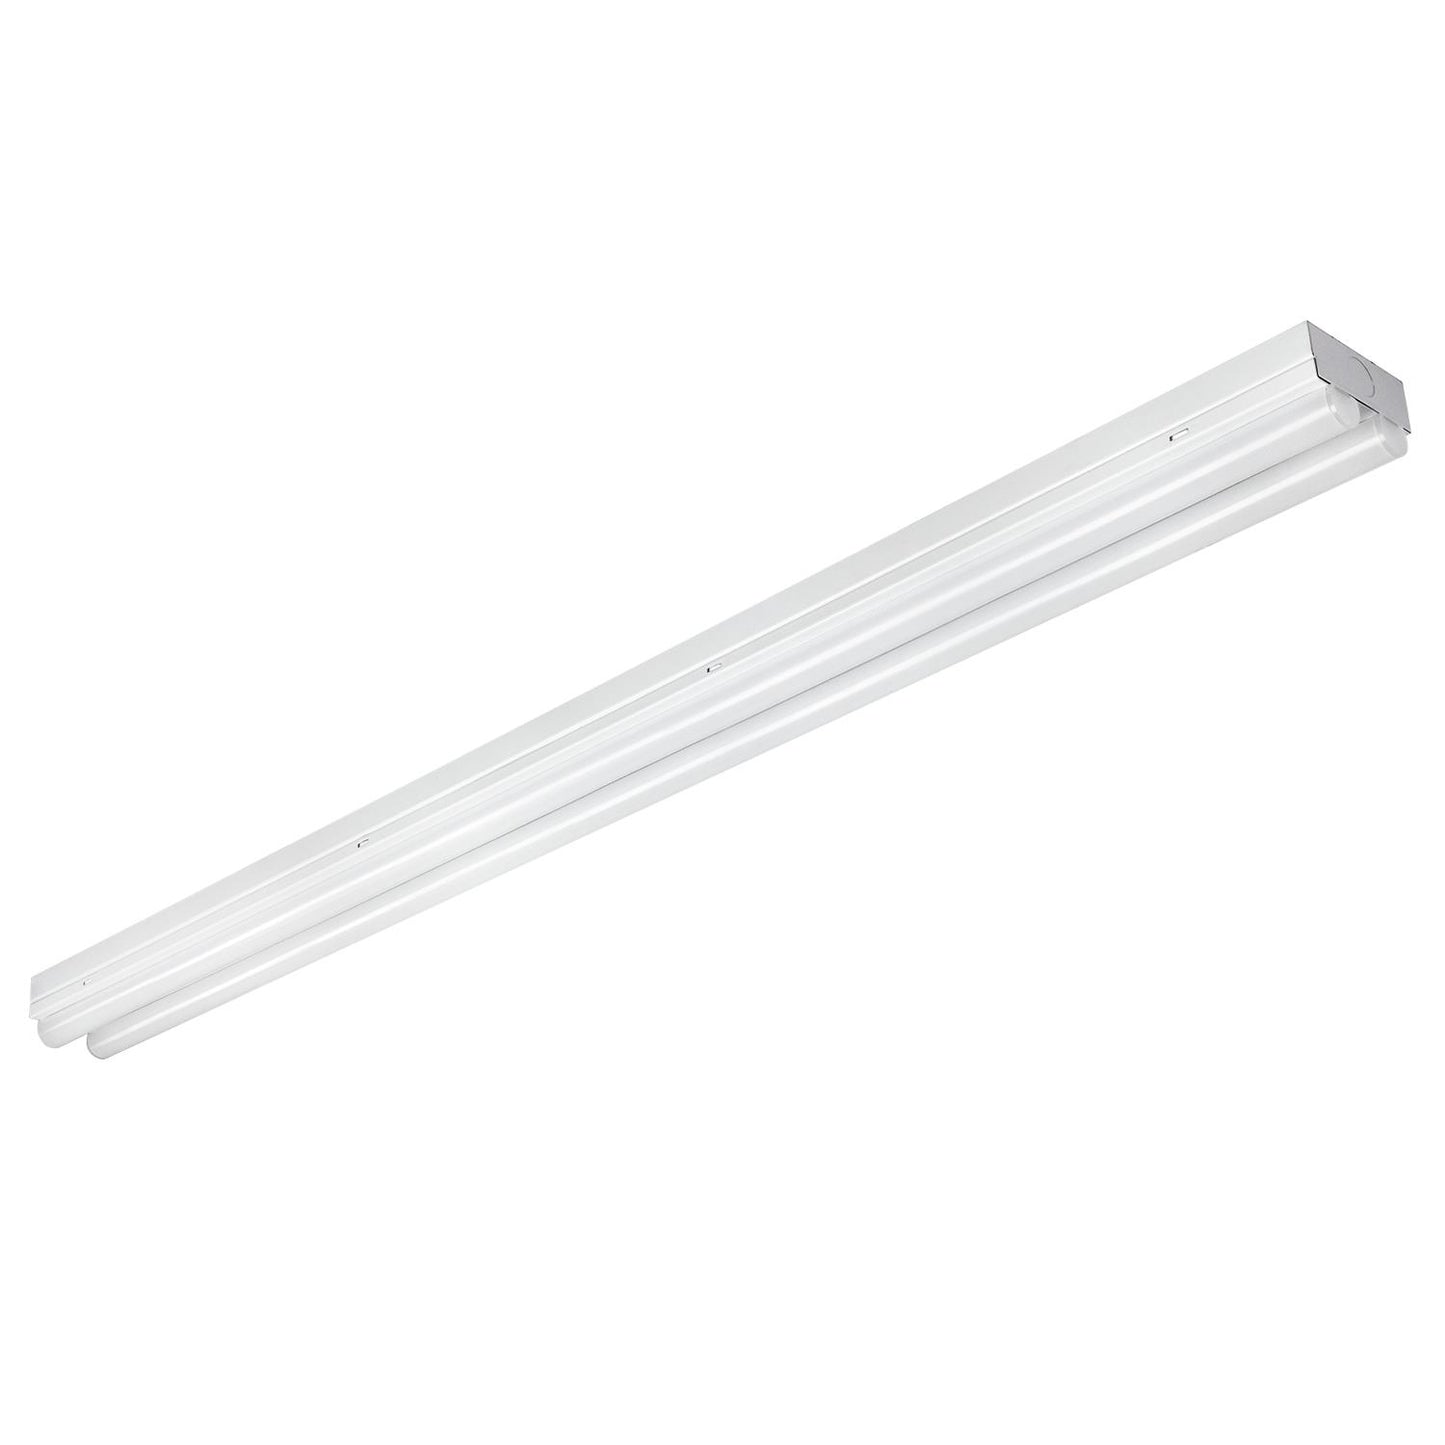 Sunlite LED 48" Linear Dual Strip Fixture, 30 Watts, 4000K Cool White, 3900 Lumen